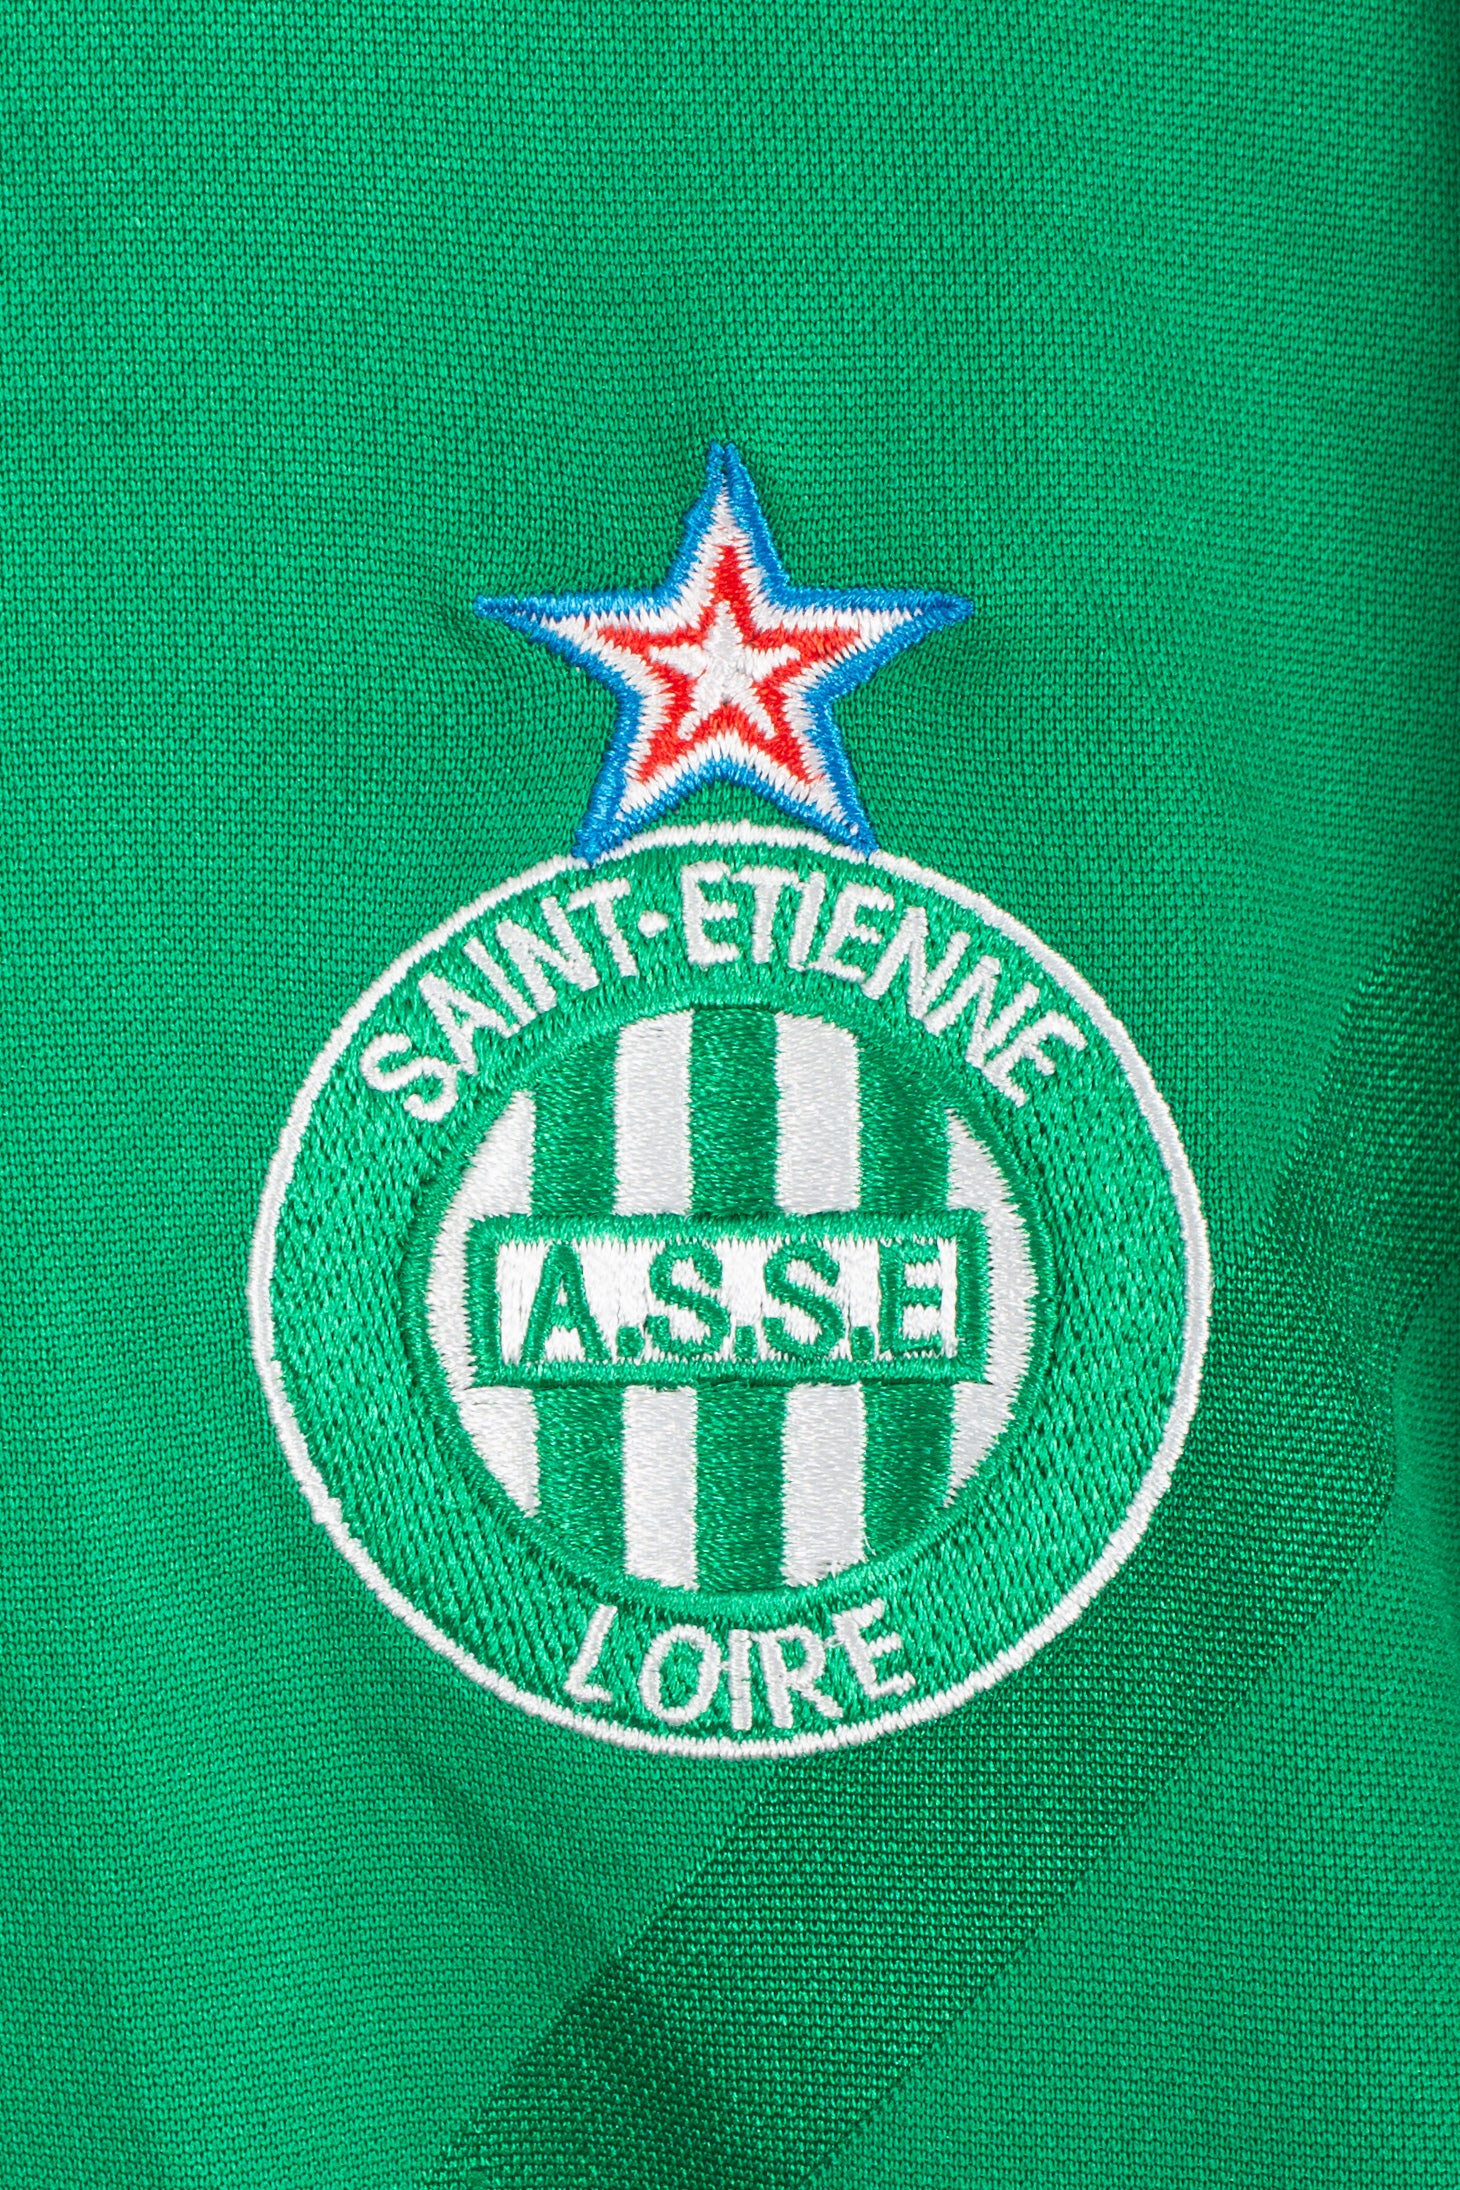 St. Etienne 2014/15 Home Shirt (XL)